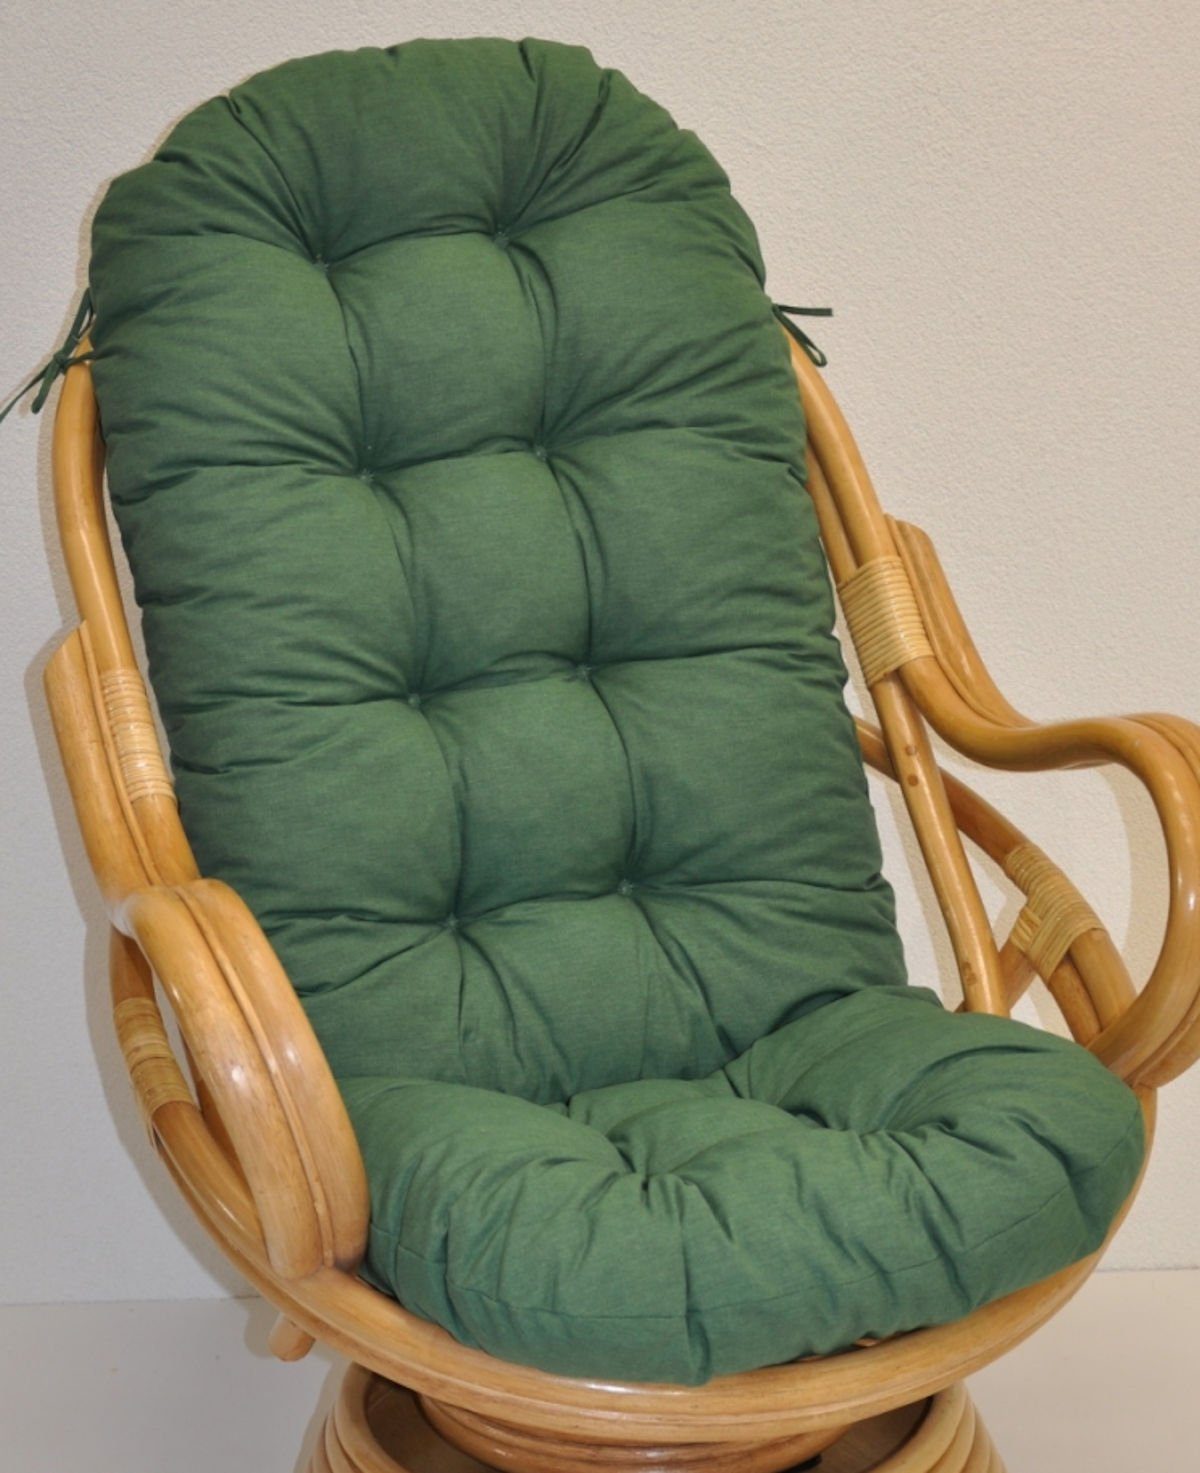 Rattani Sesselauflage Polster für Rattan Schaukelstuhl Drehsessel L 135 cm Color dunkelgrün